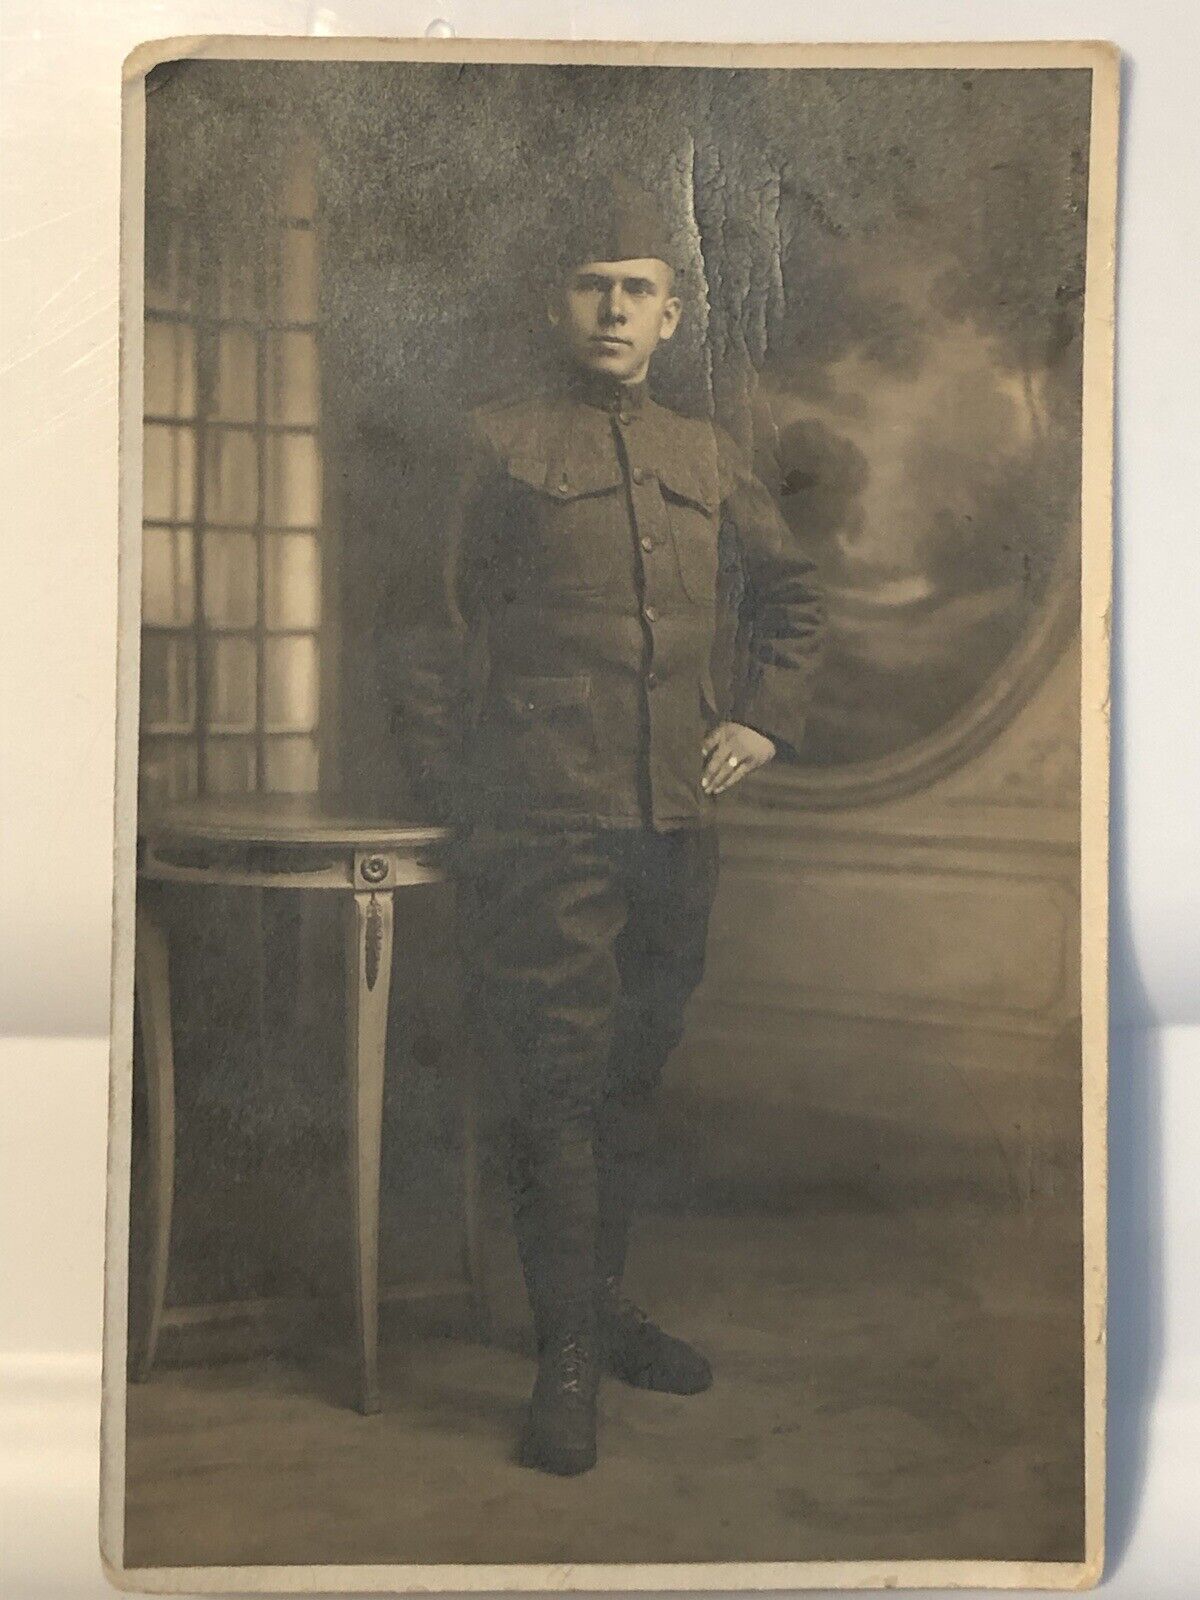 WWI Real Photograph of Uniformed US Soldier Taken in Brest France